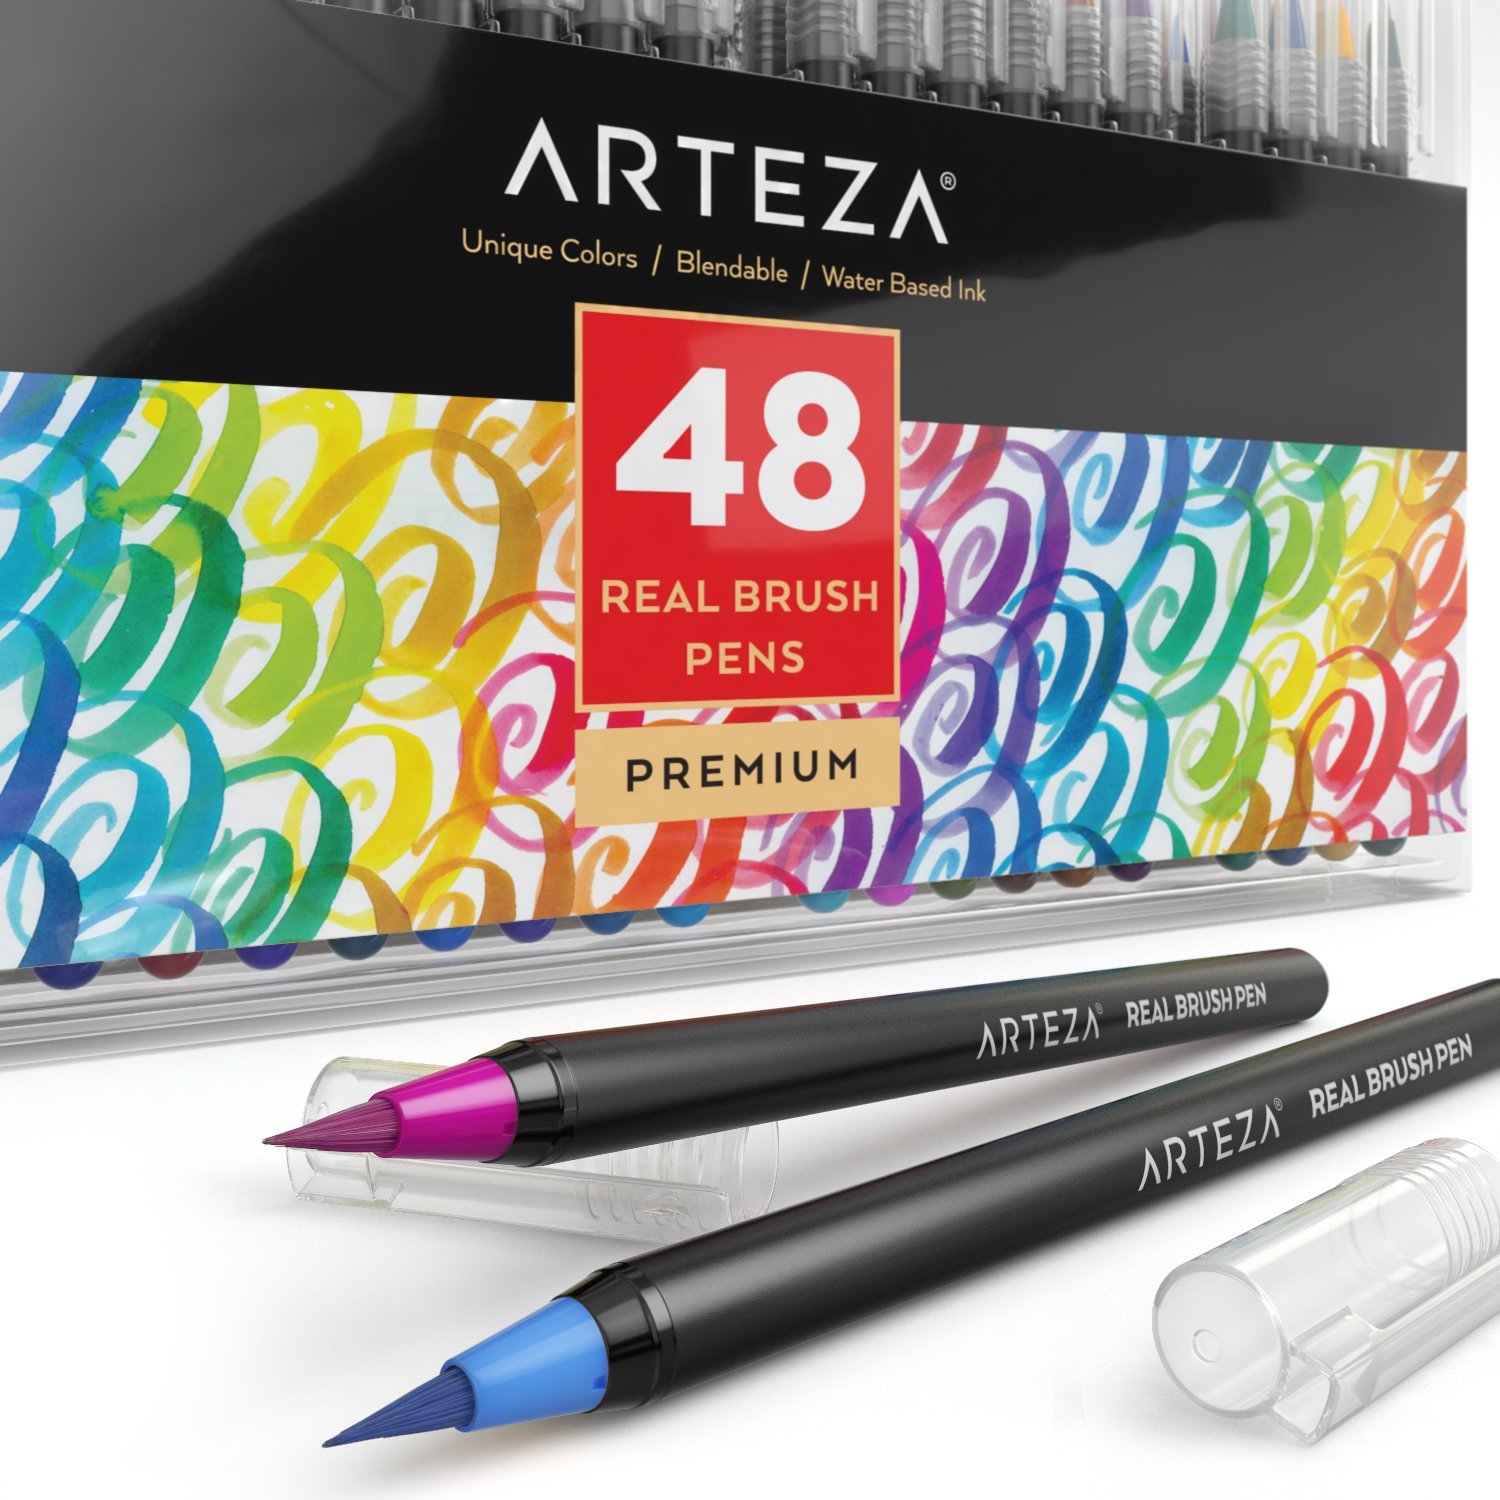 Arteza Brush Pens Review 